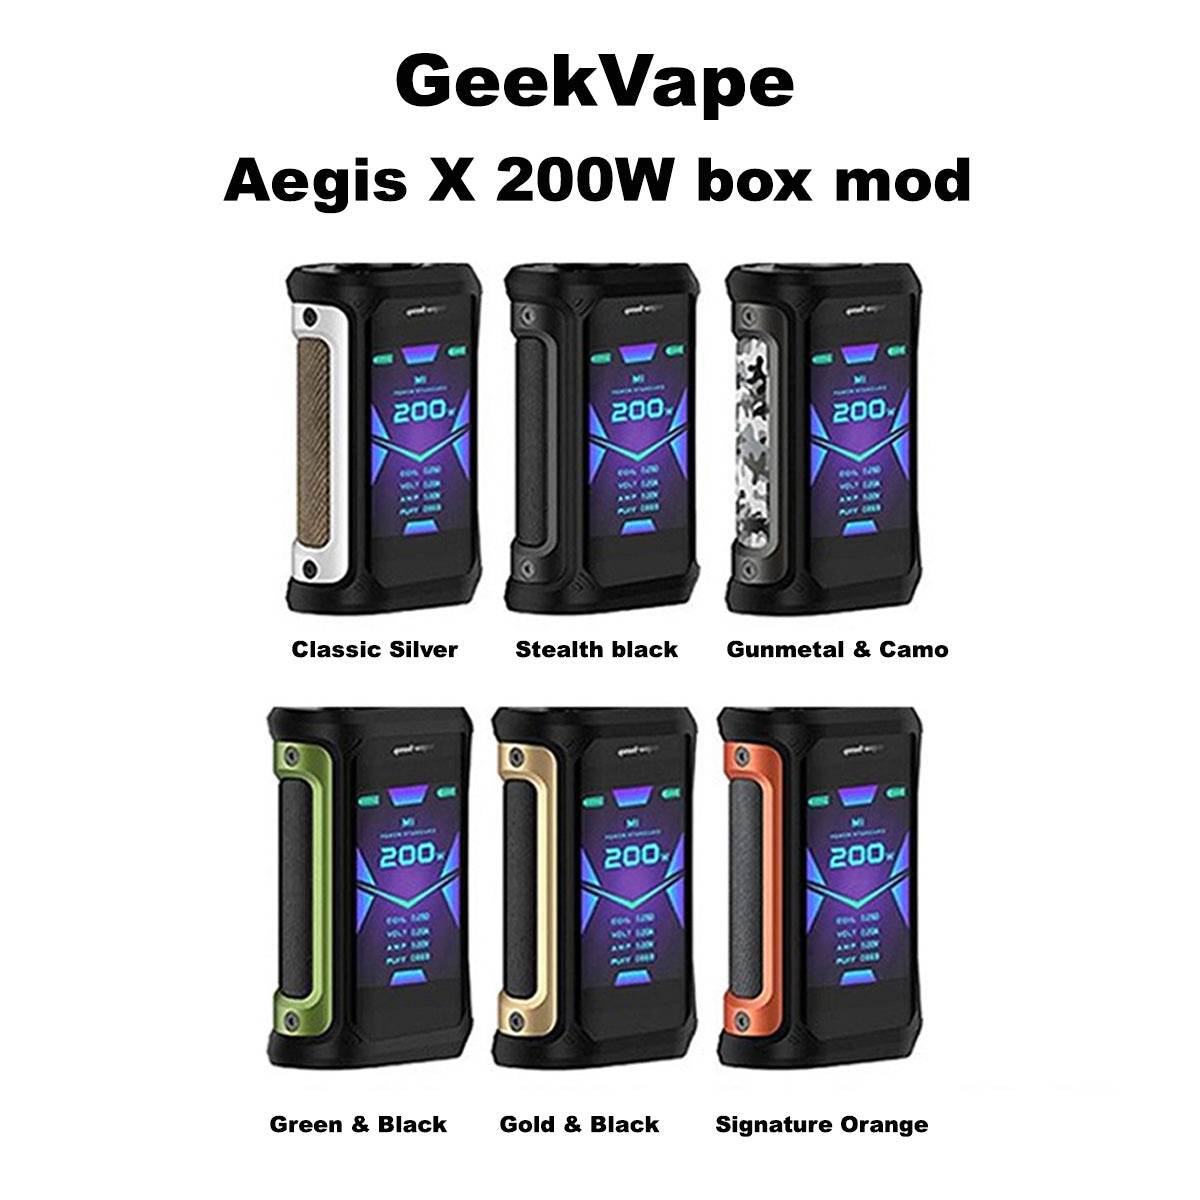 Geekvape Aegis X 200W box mod